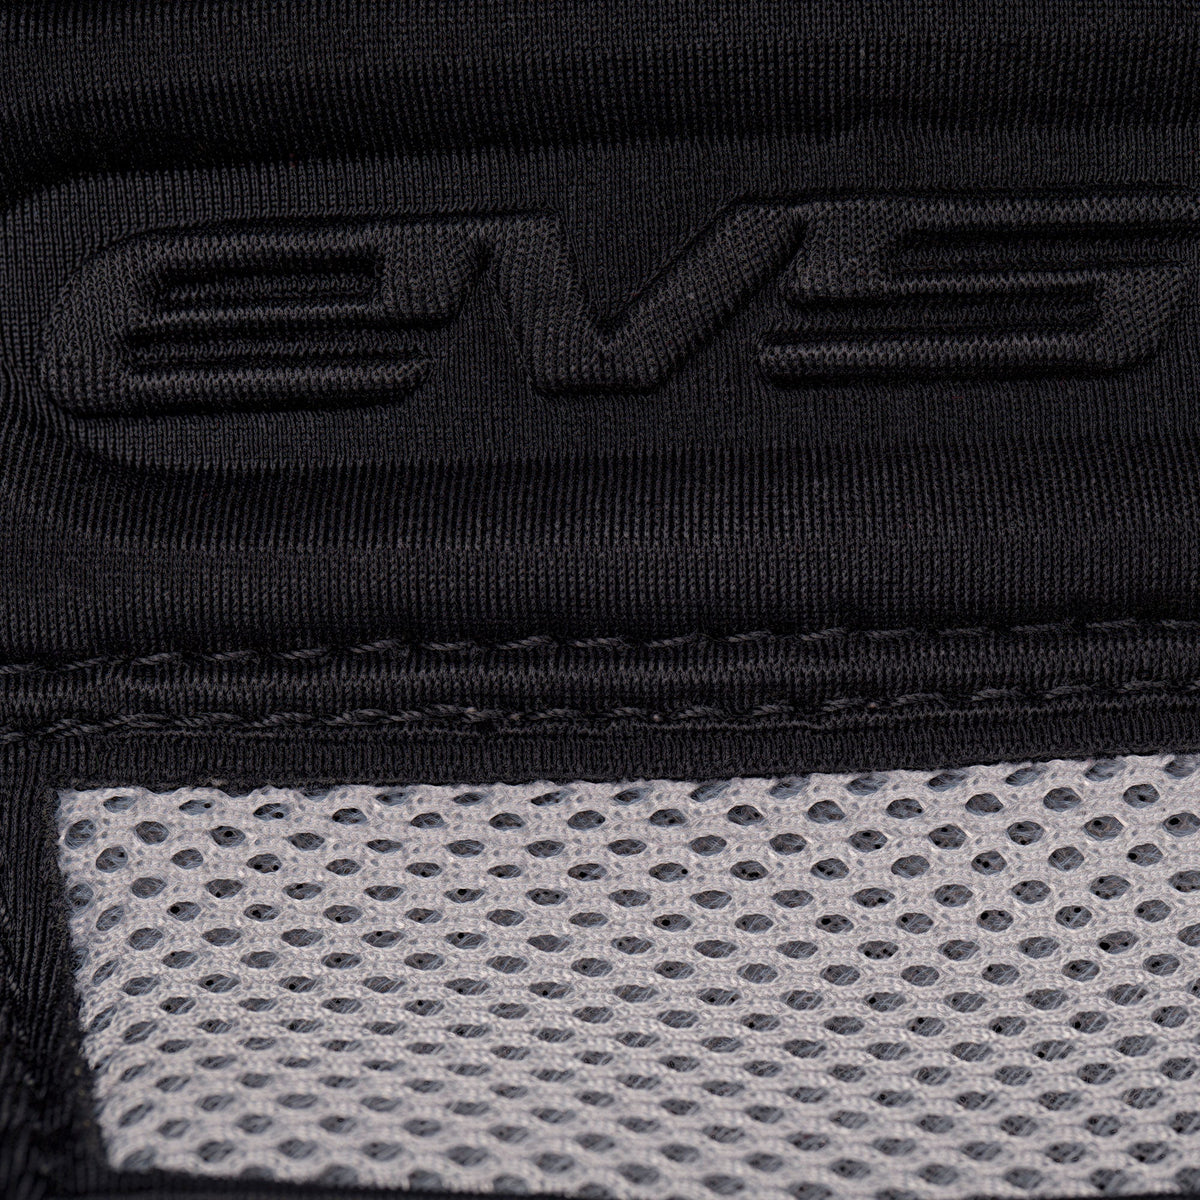 EVS RS9 Knee Brace